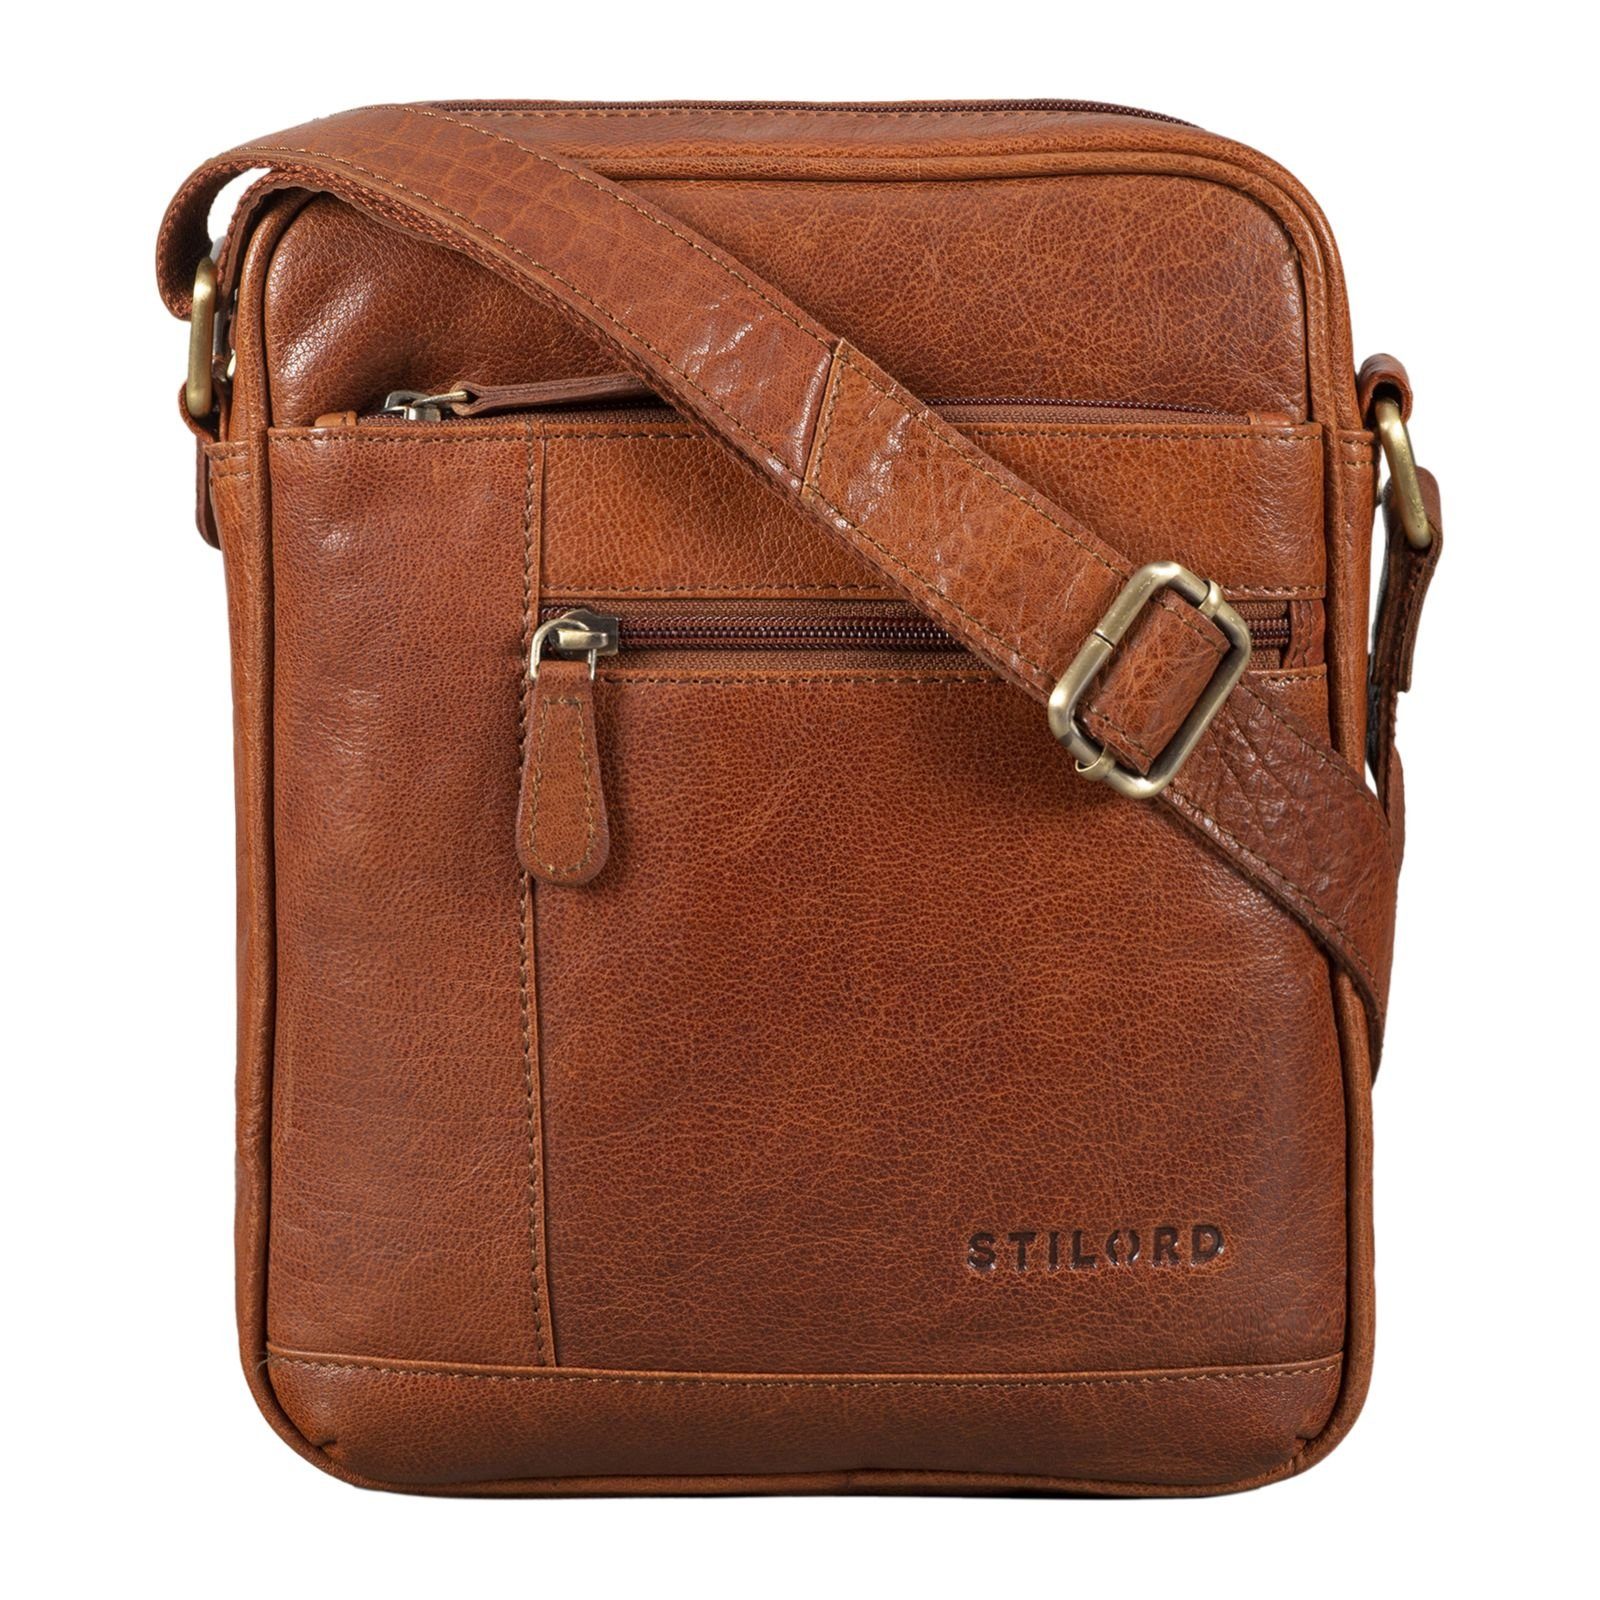 STILORD Messenger Bag "Diego" Vintage Herrentasche Leder klein maraska - braun | Messenger Bags